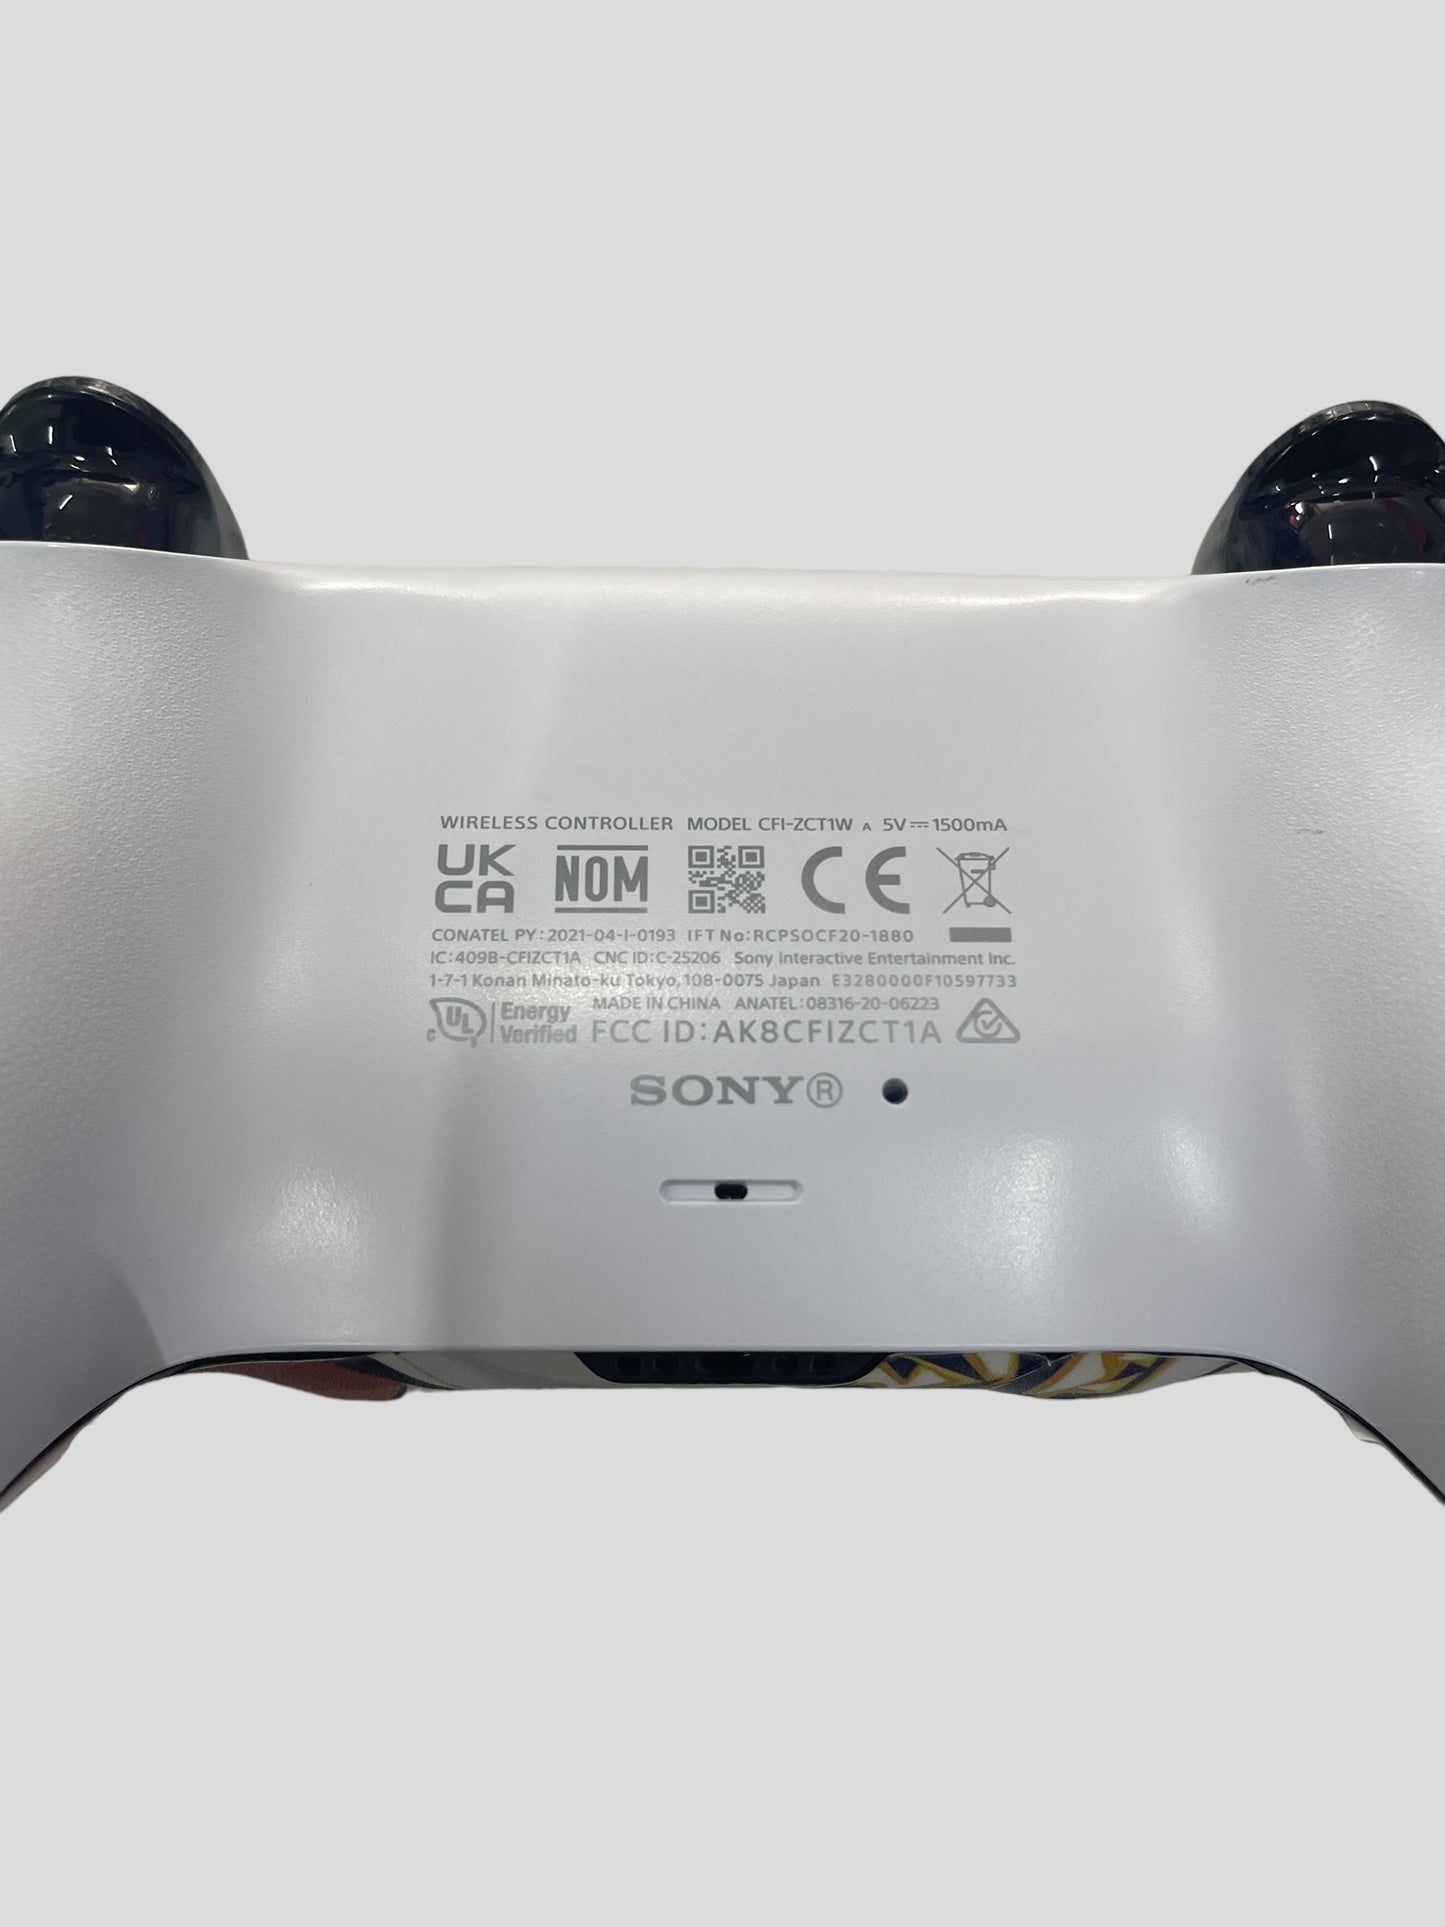 Sony PlayStation 5 Controller CFI-ZCT1W